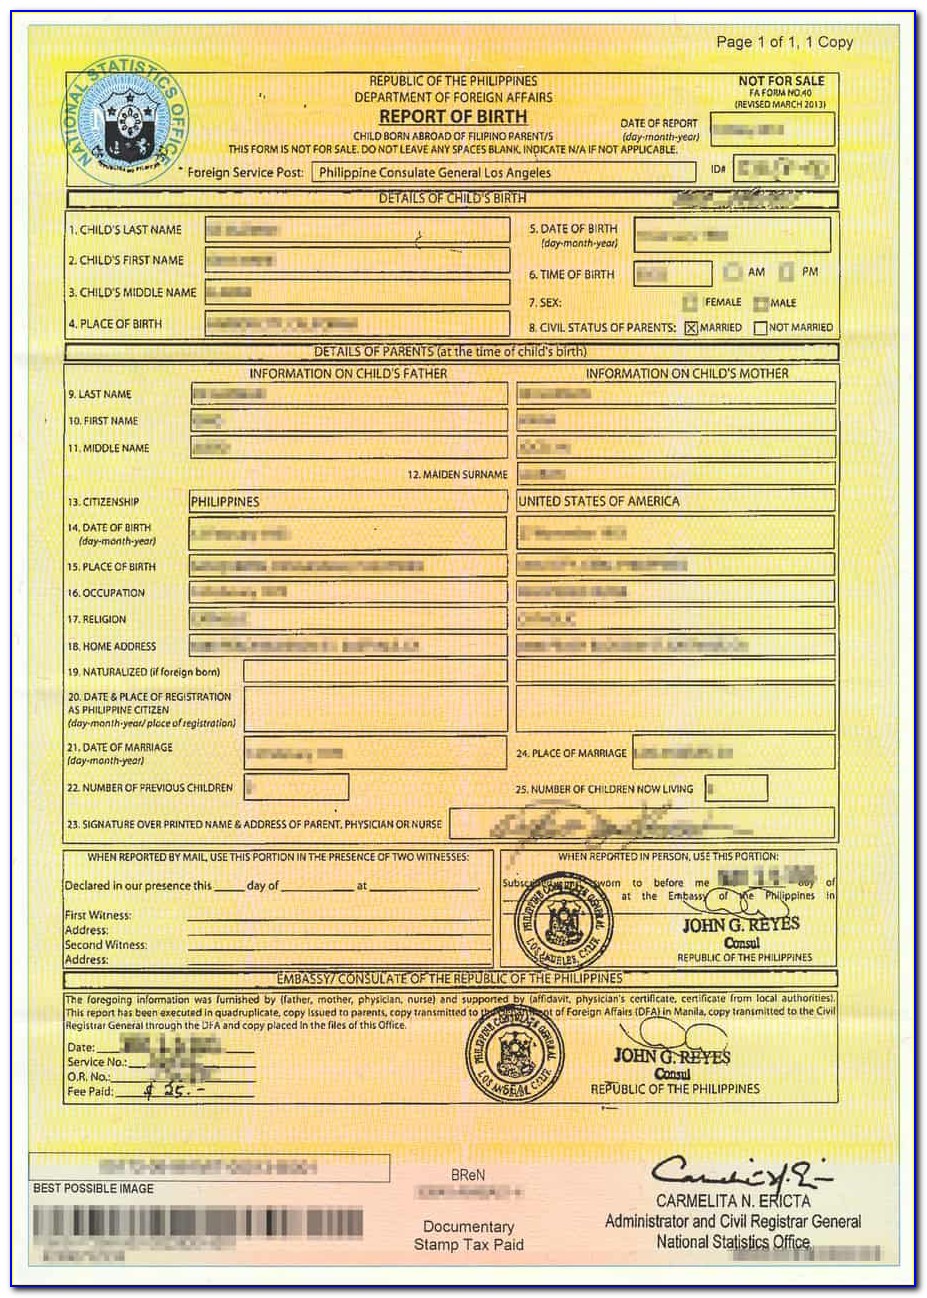 Automotive Technician Certification Test Preparation Manual 4th Edition Pdf